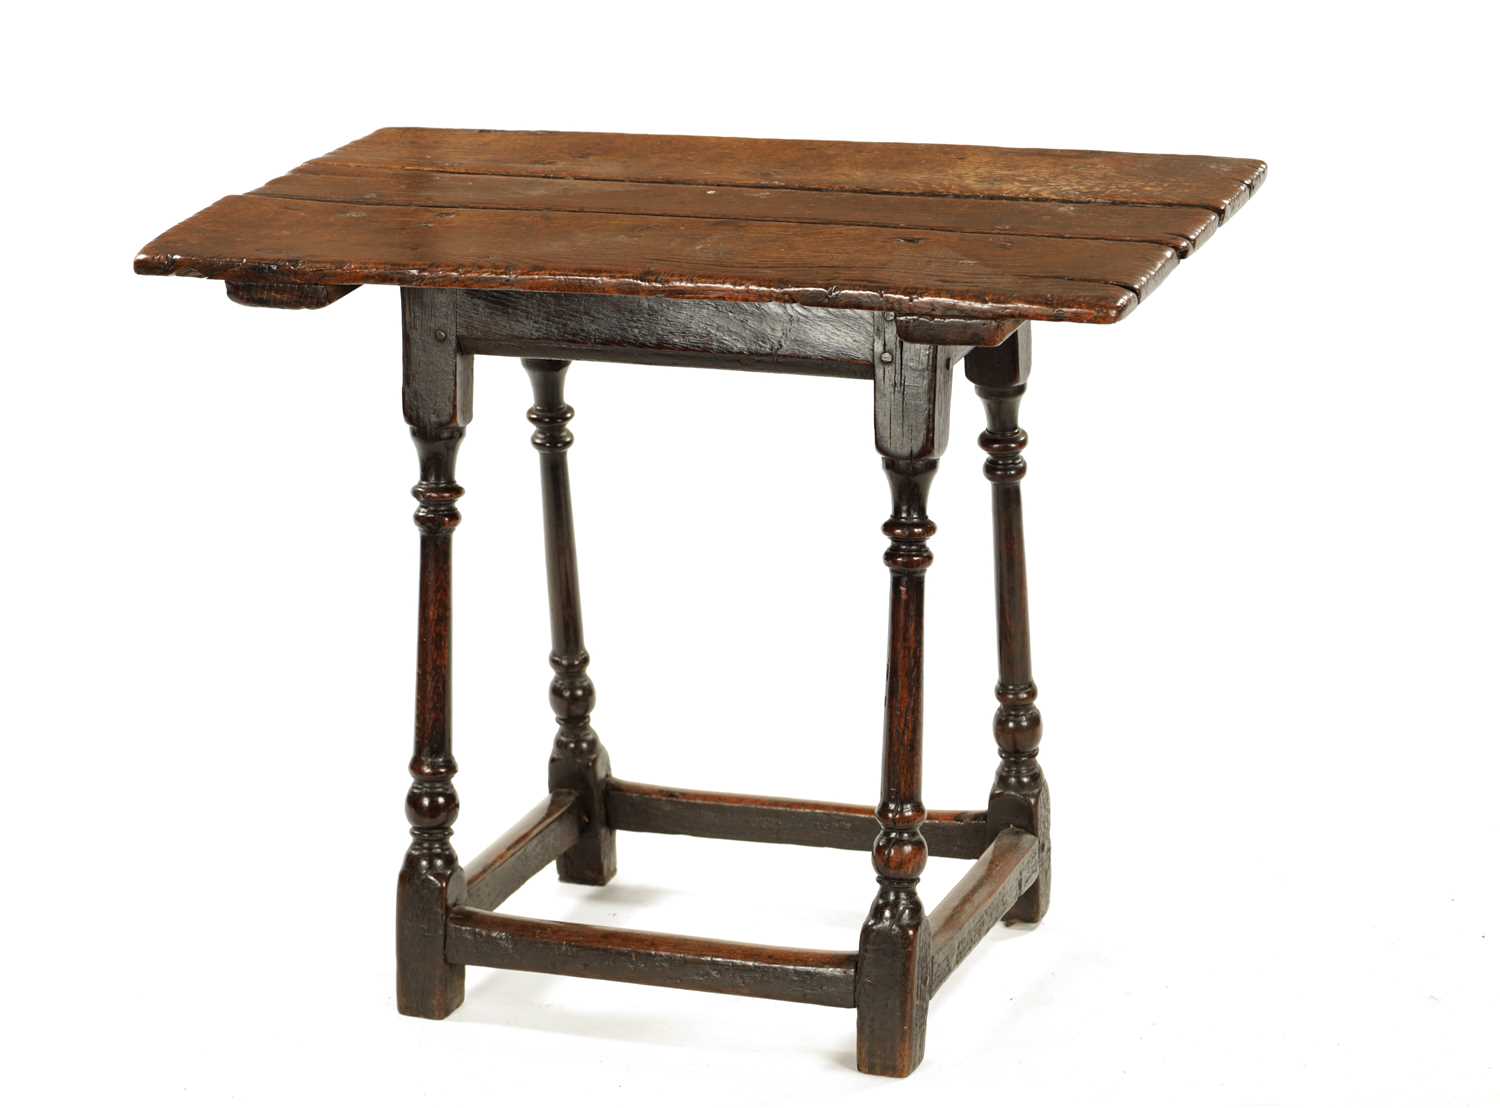 A LATE 17TH CENTURY OAK RECTANGULAR SMALL TABLE